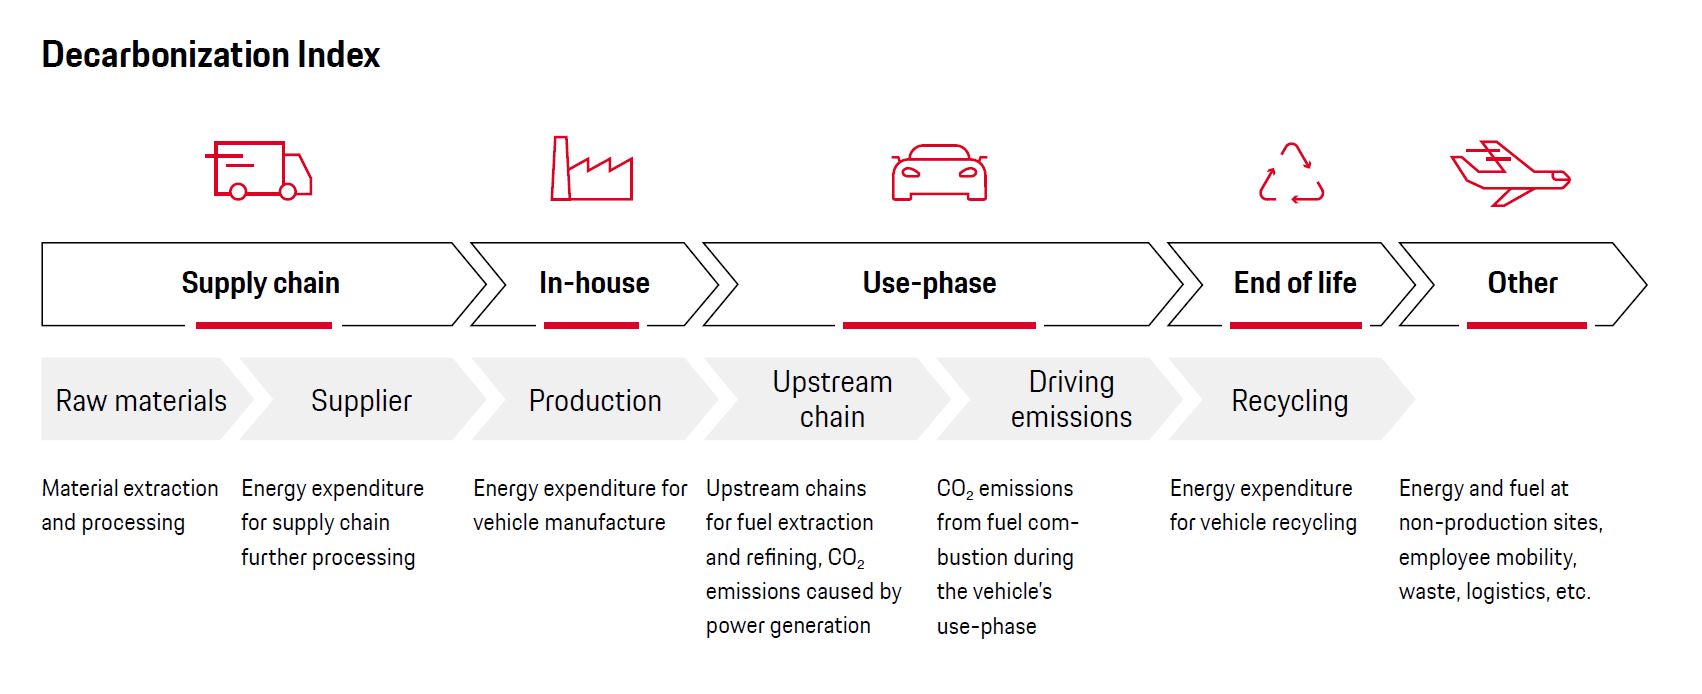 Fleet decarbonization: The management value chain